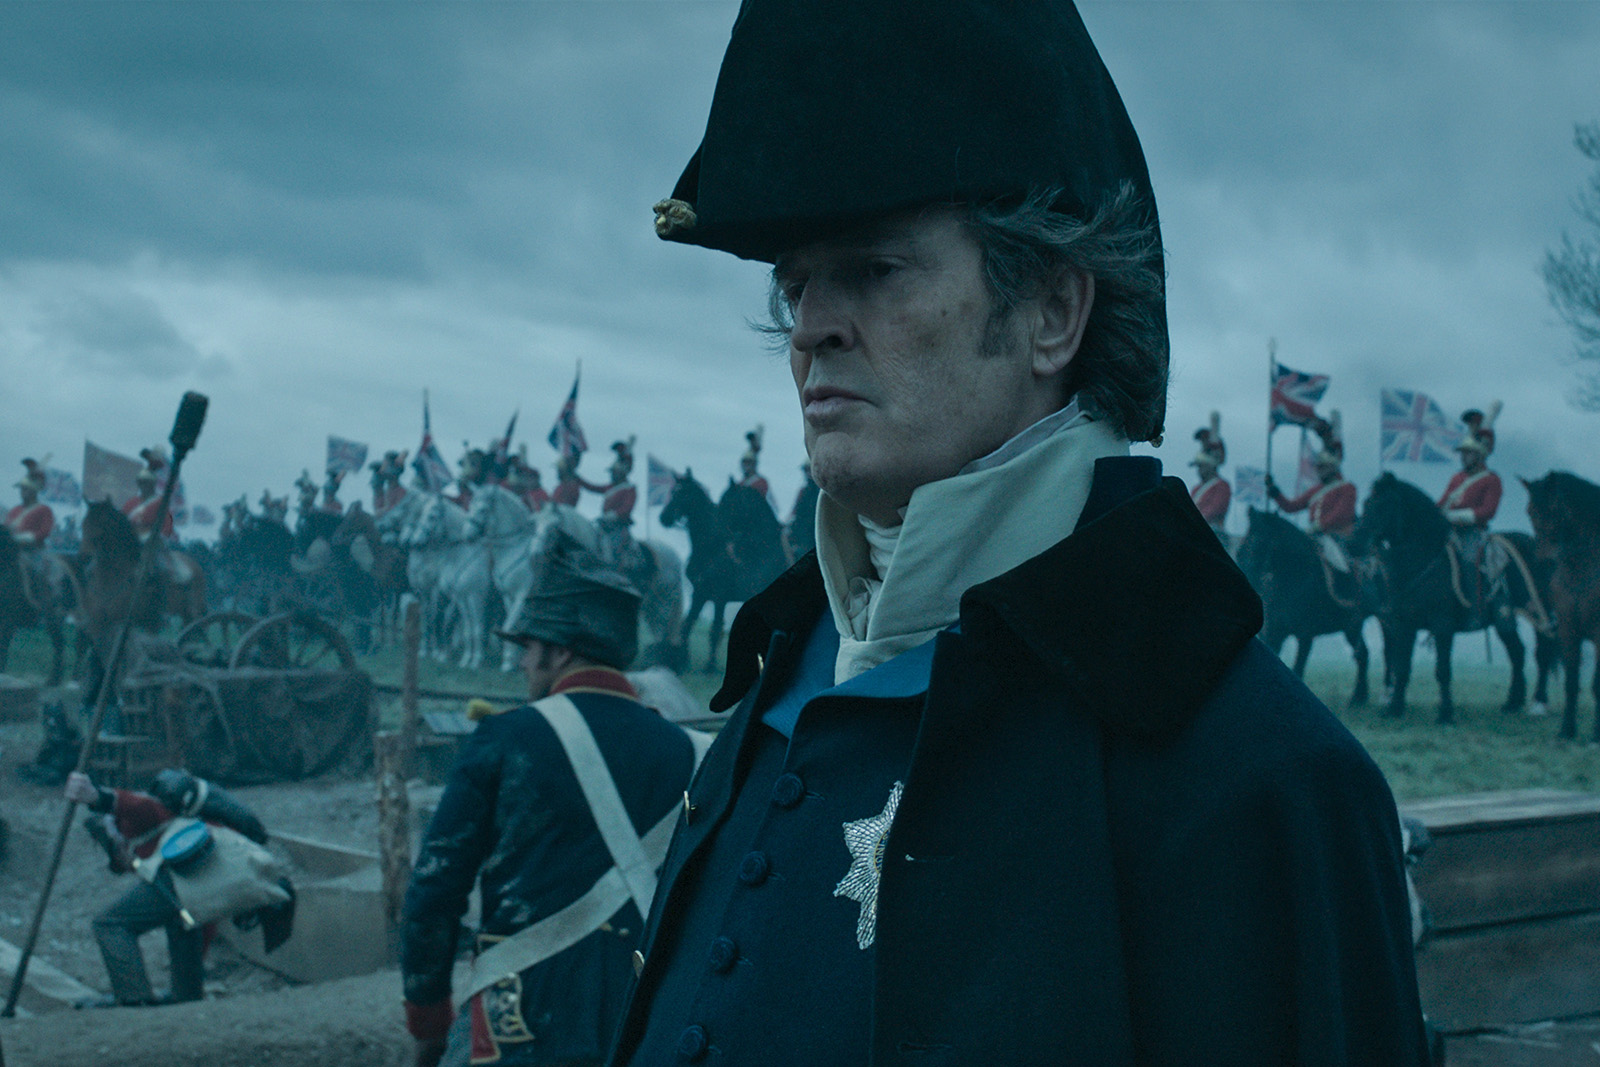 Rupert Everett plays the Duke of Wellington, Napoleon's opponent on the battlefield. Image © Apple